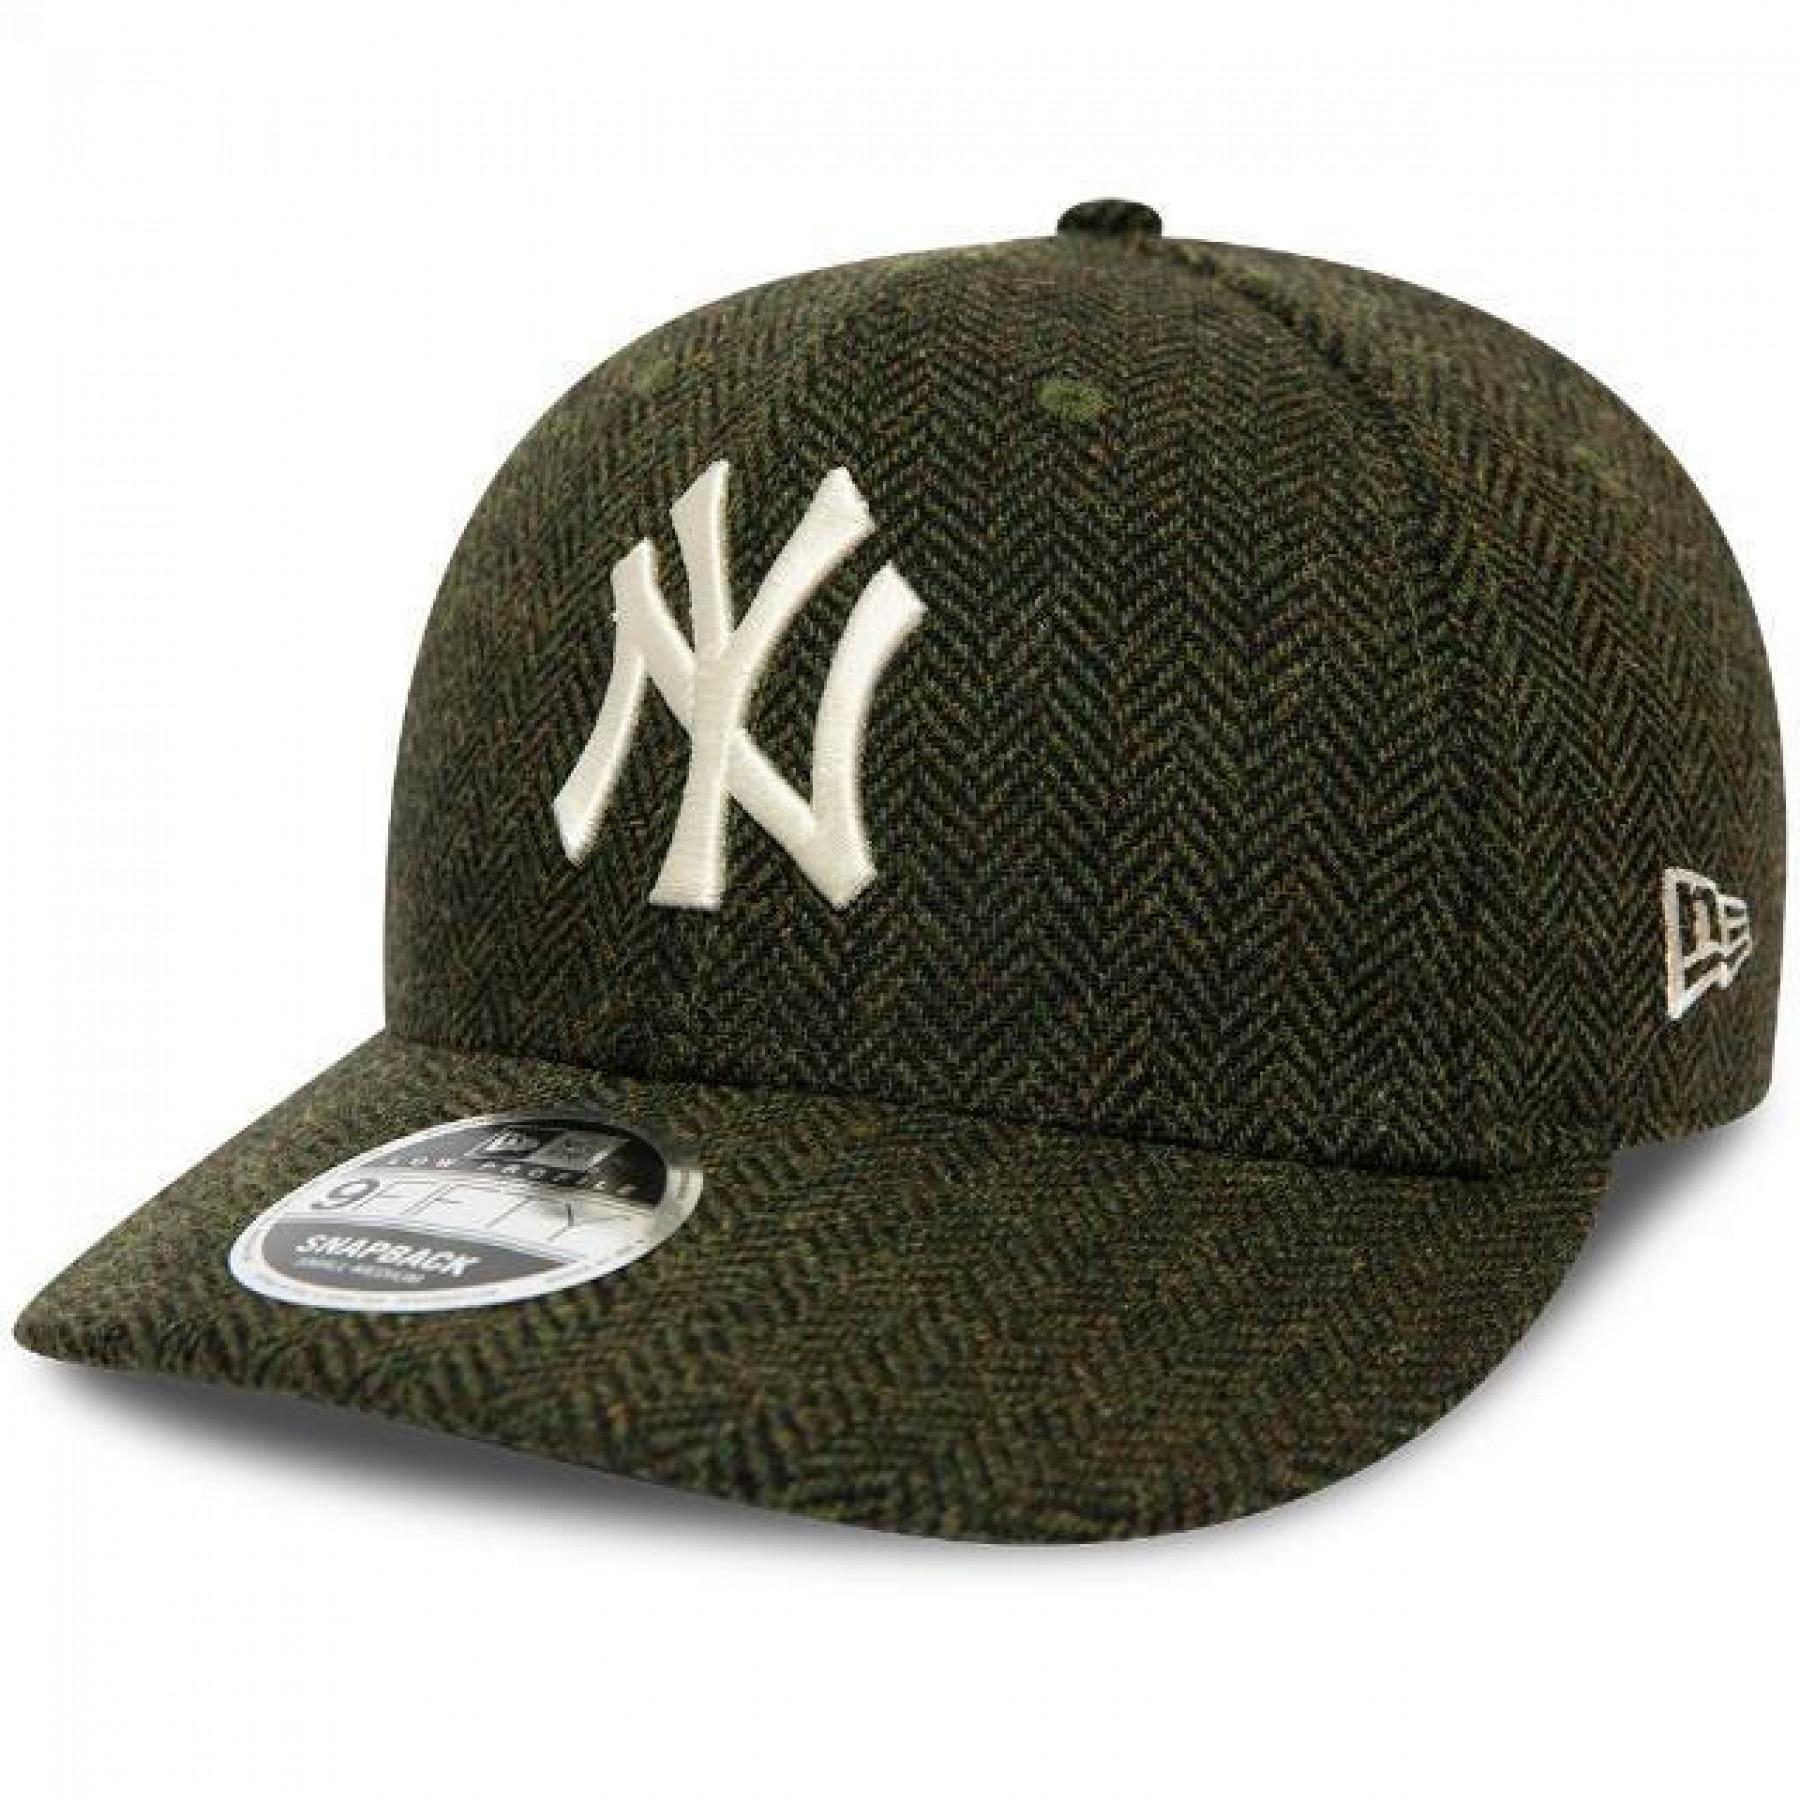 Casquette New Era MLB Tweed 9fifty New York Yankees